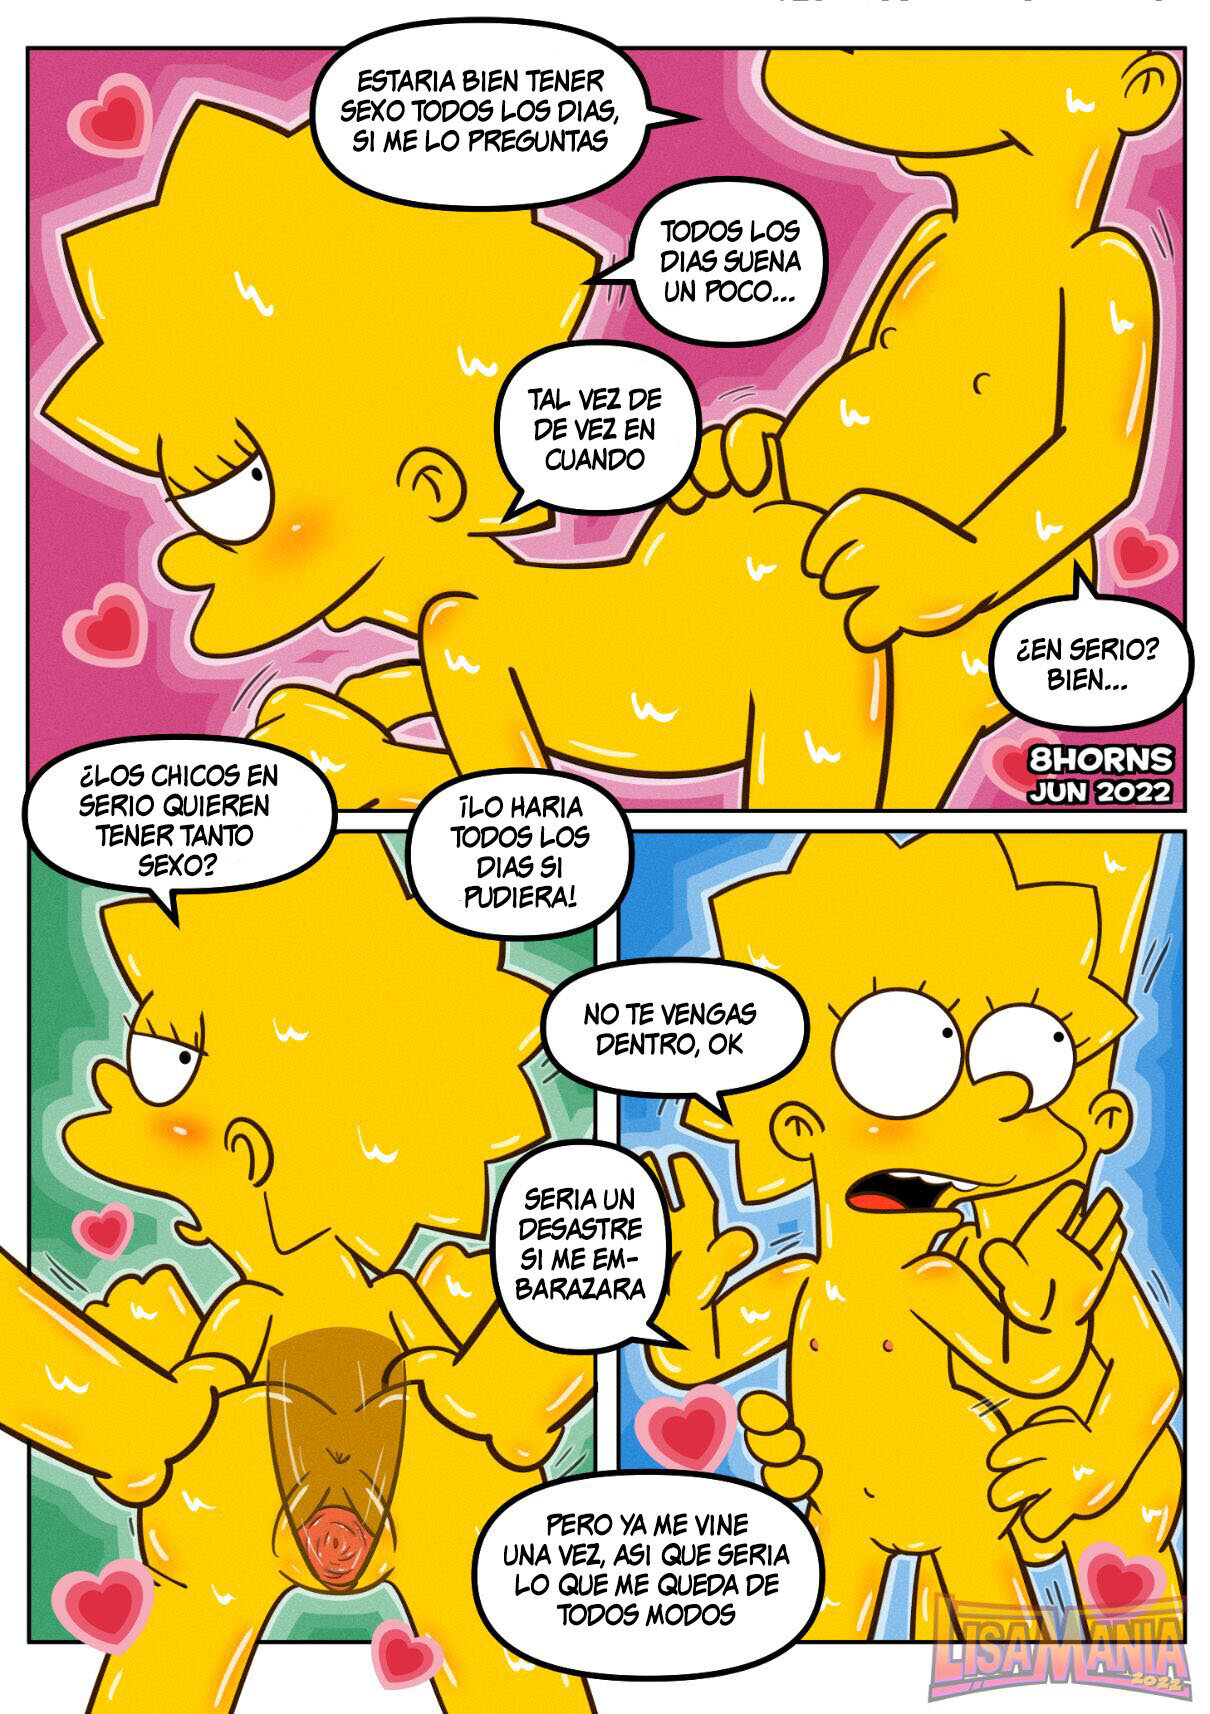 That's Not Fair, Is It! (ver. Simpsons) - 16